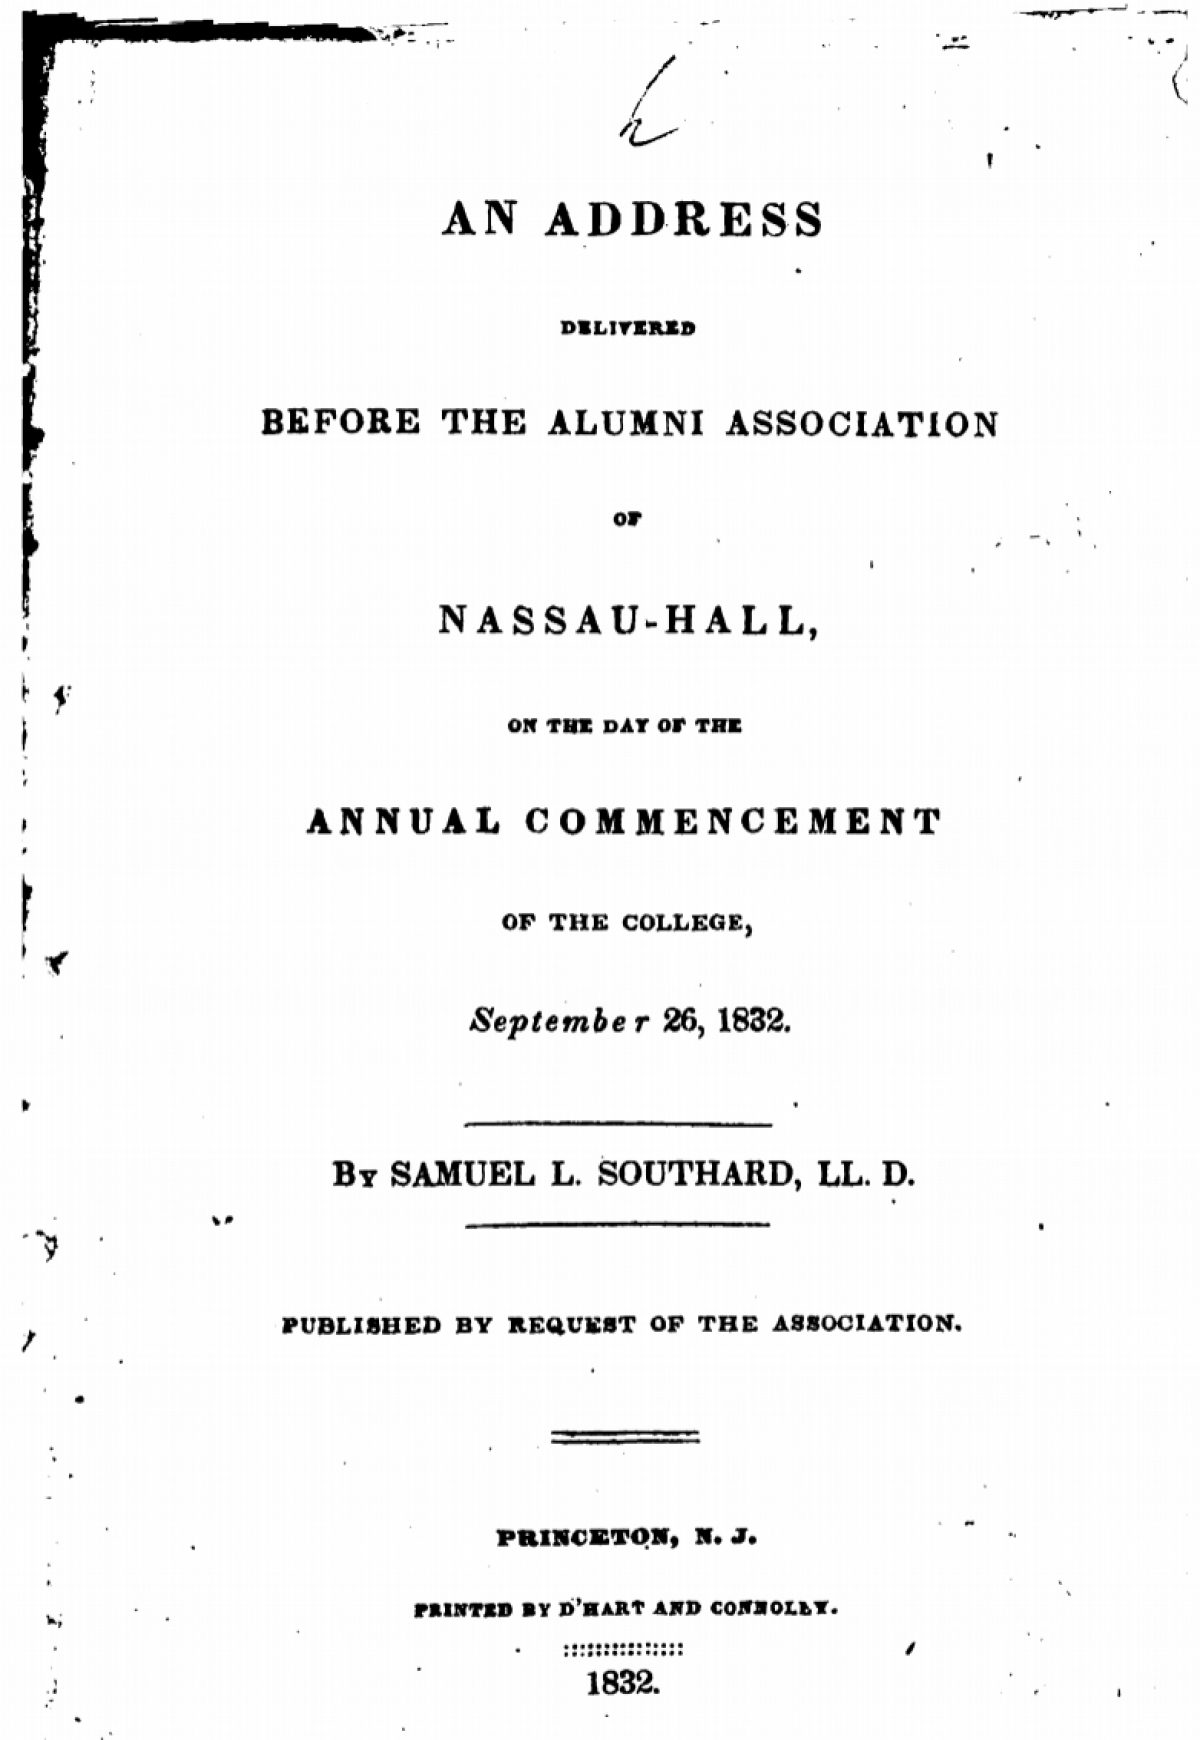 "An Address Delivered Before the Alumni Association of Nassau-Hall"